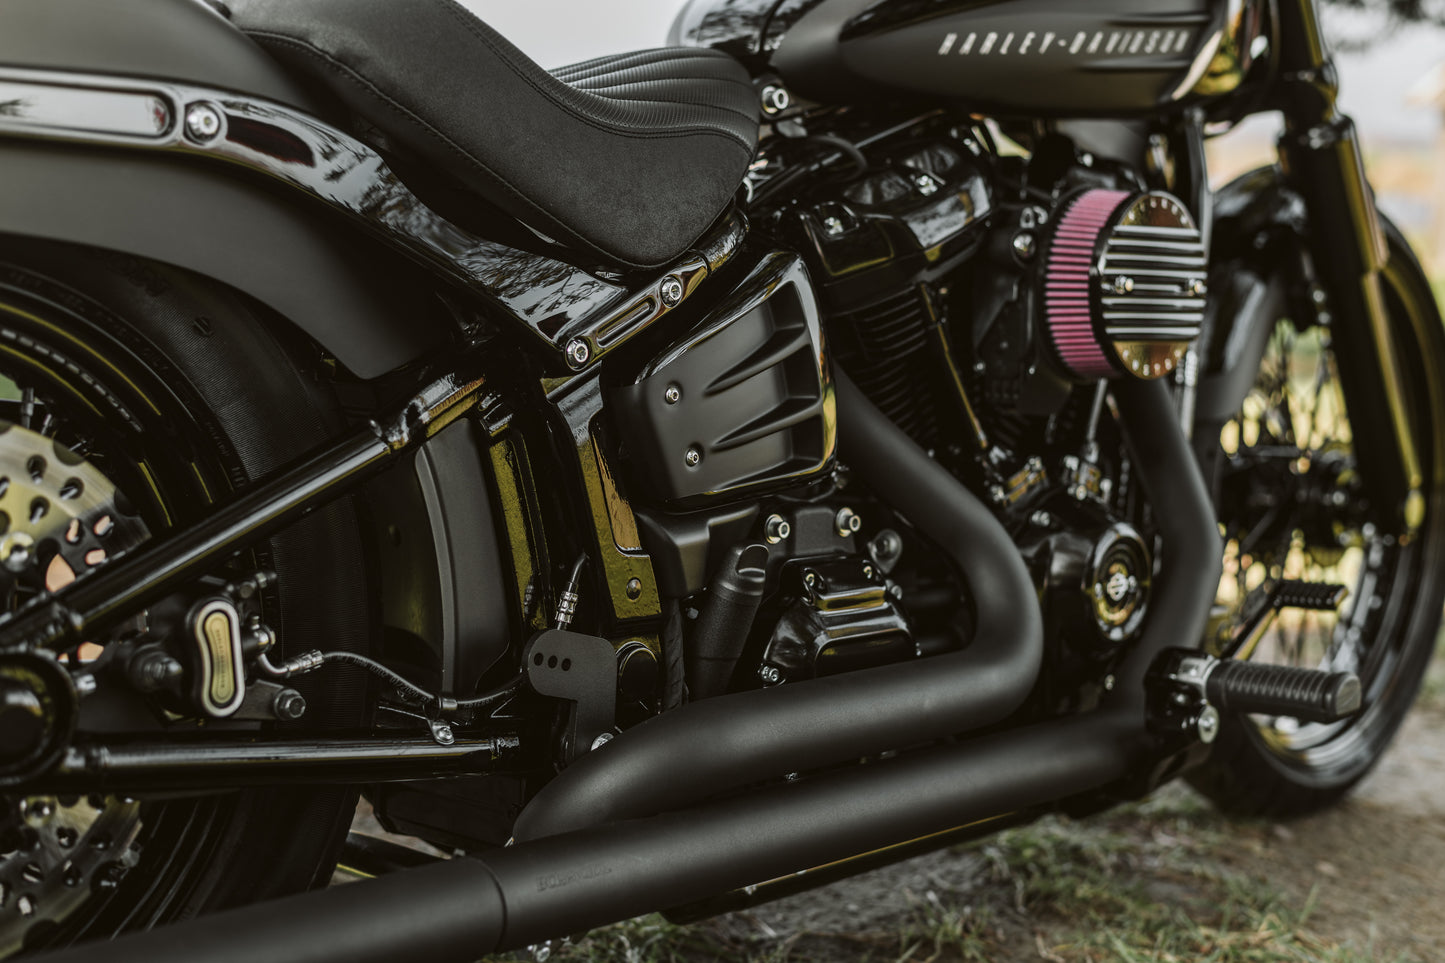 Zoomed Harley Davidson motorcycle with Killer Custom "Avenger" shock absorber adjustment knob from the side